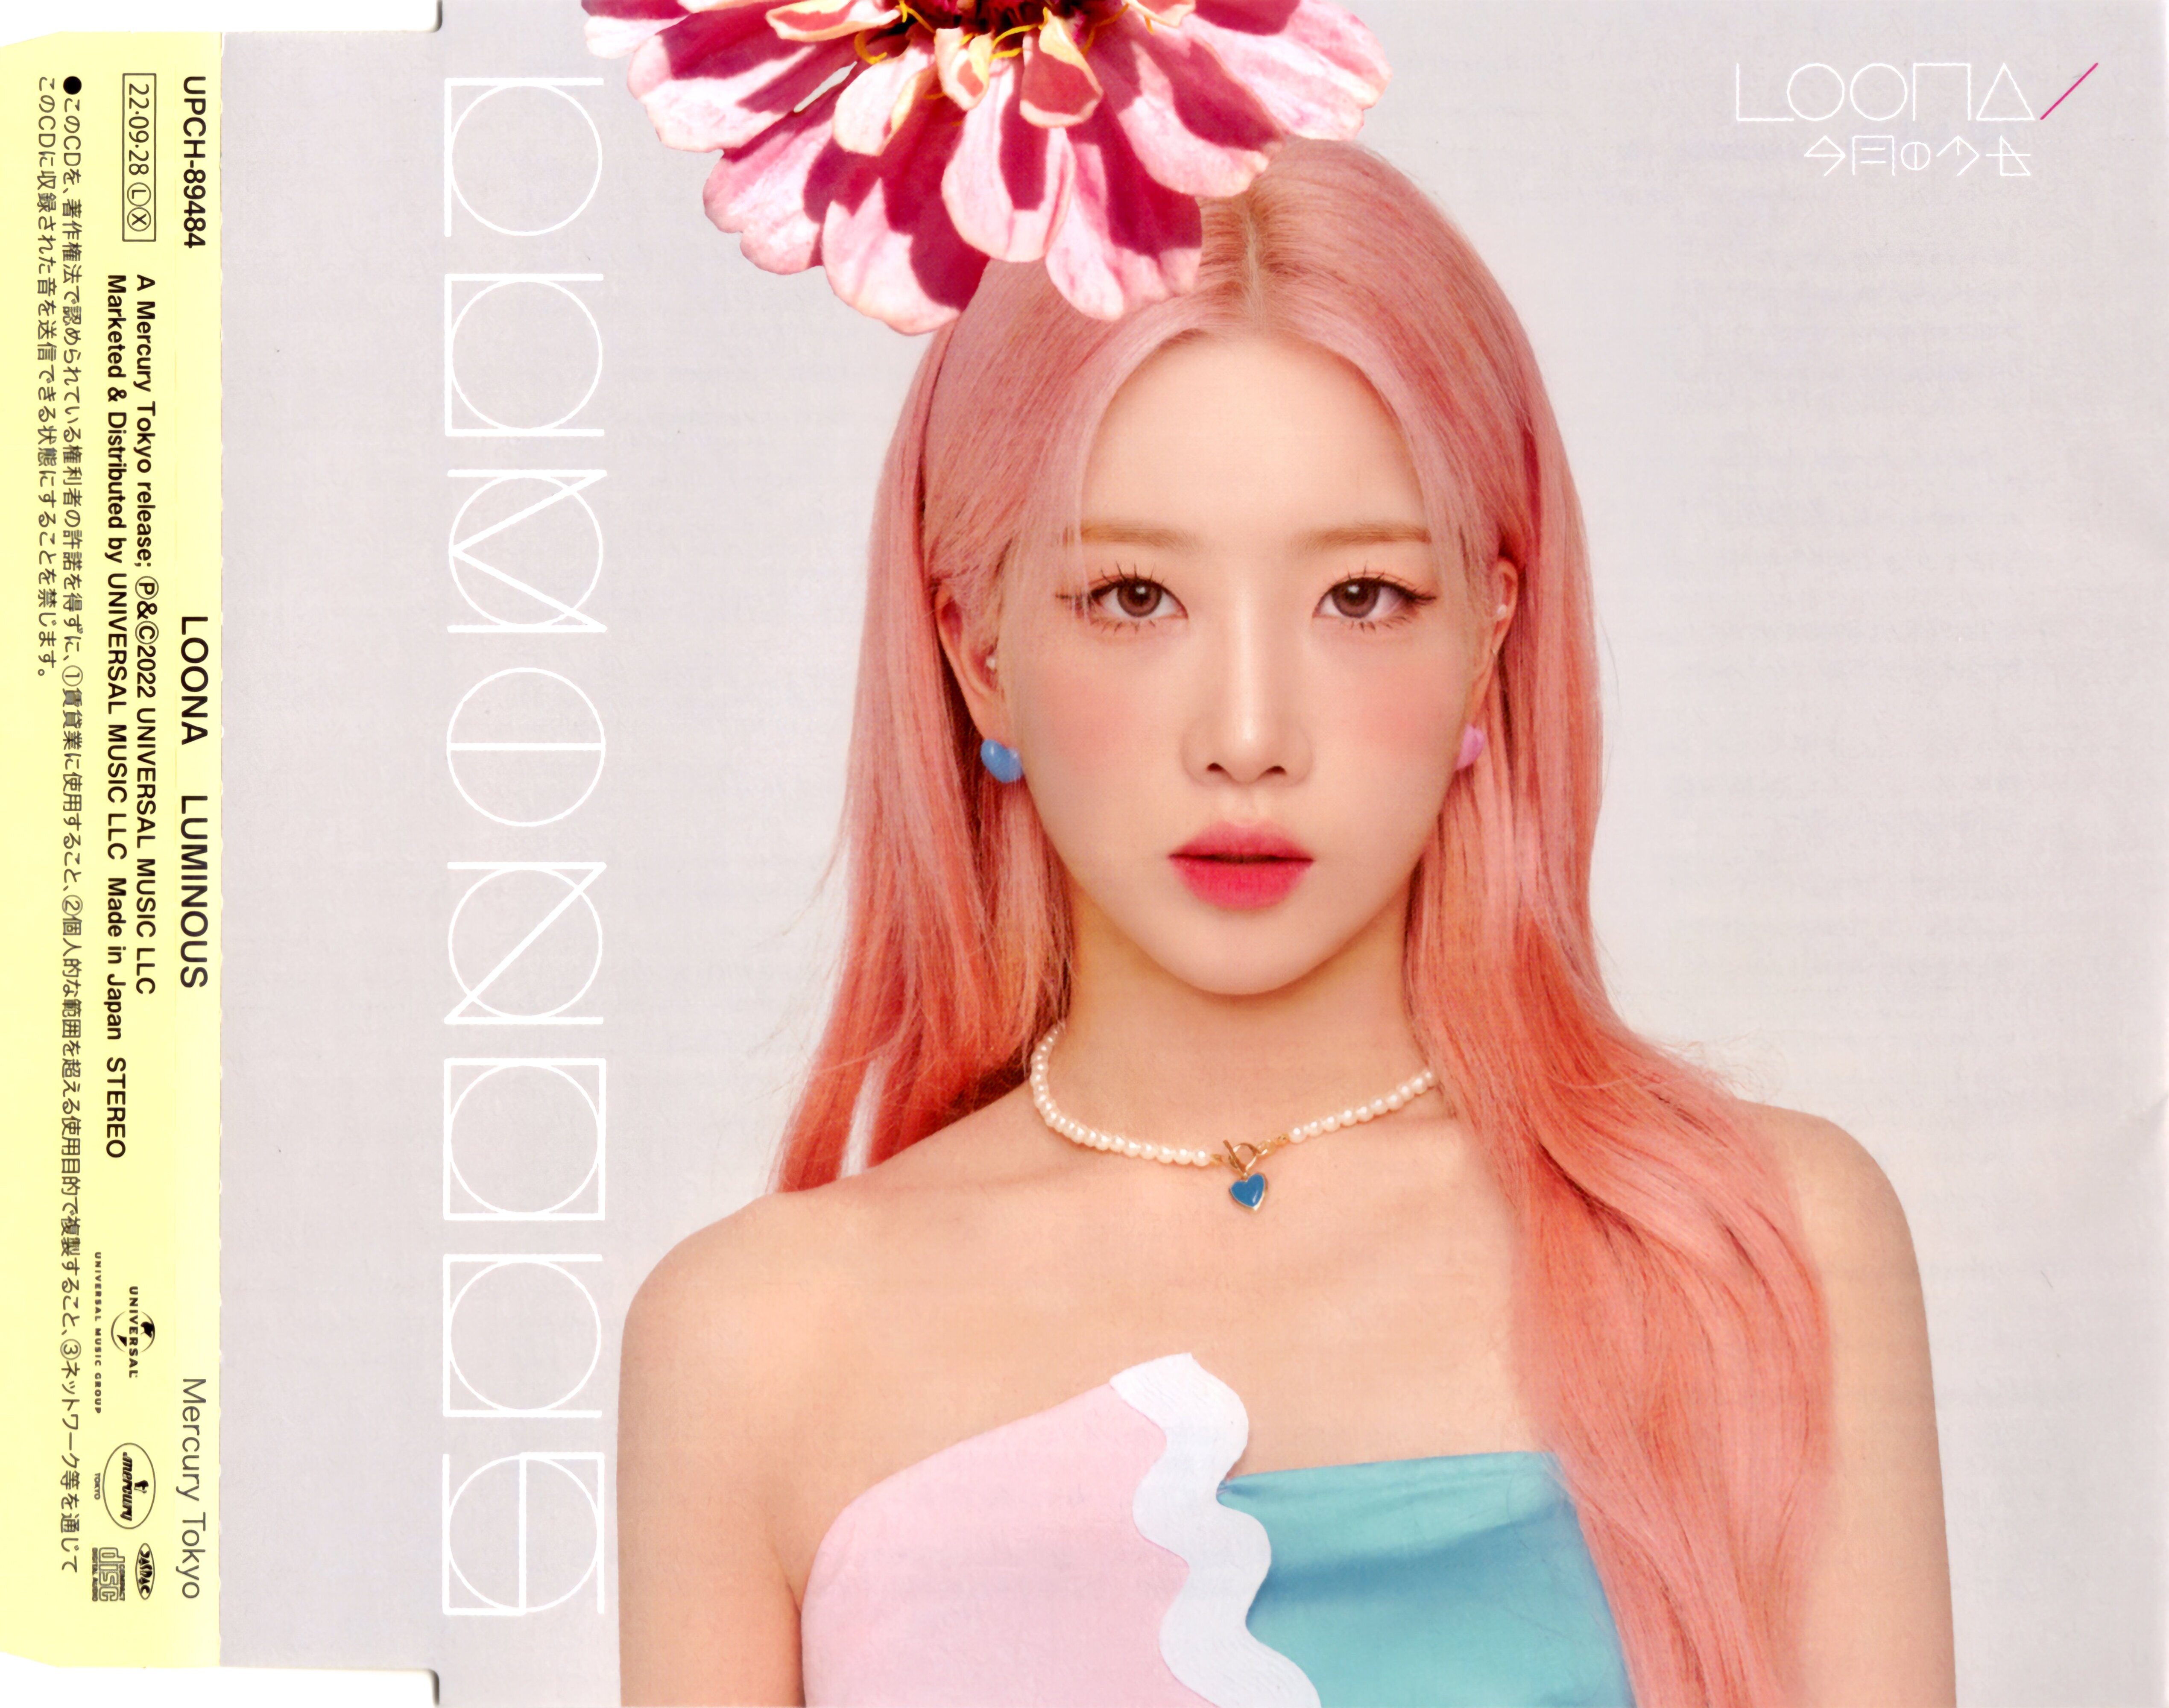 LOONA (今月の少女) LUMINOUS Album Unboxing 